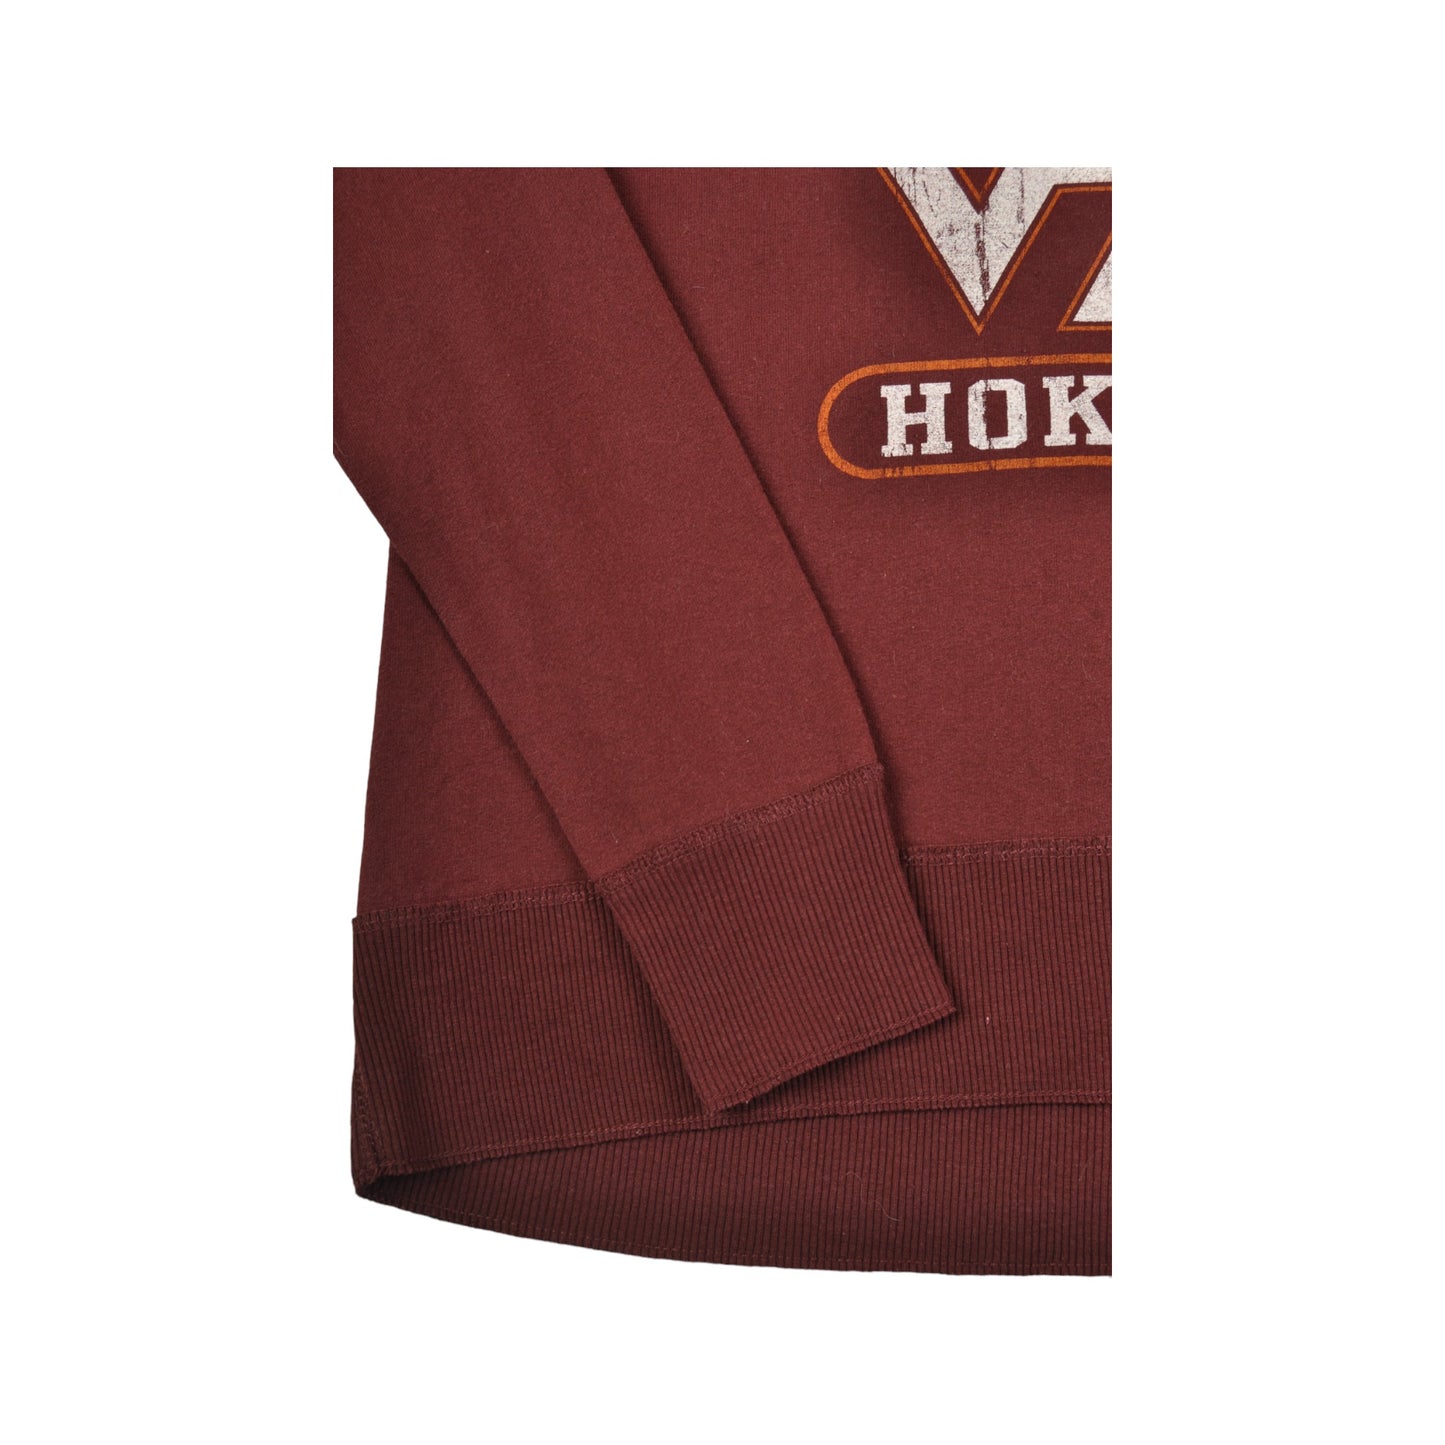 Vintage Champion Virginia State Hokies Crew Neck Sweatshirt Burgundy Ladies Medium